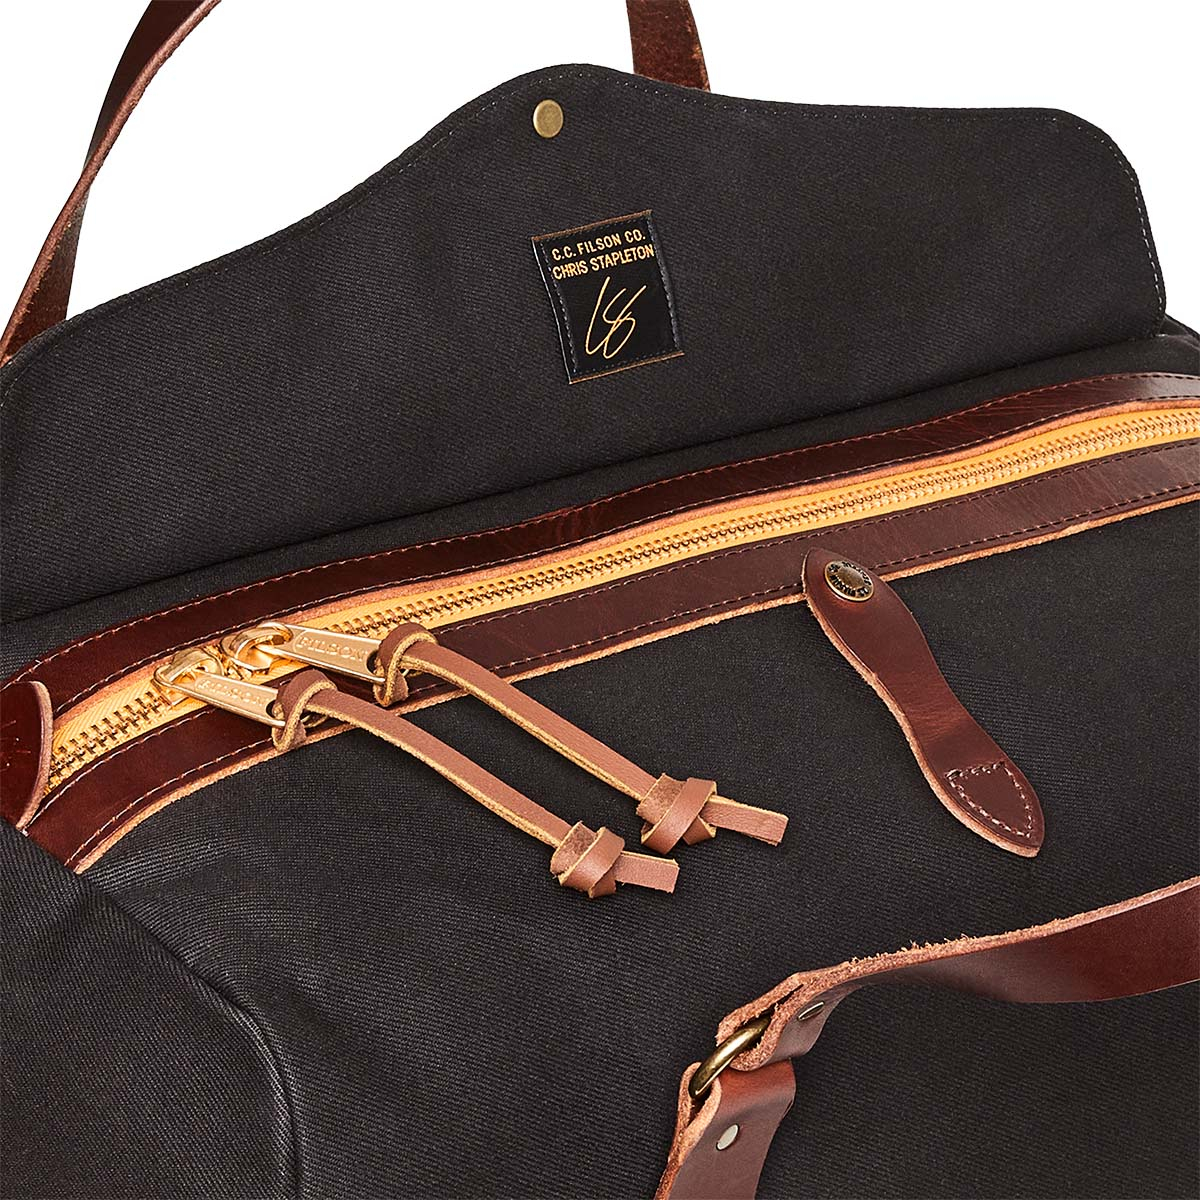 Filson Traveller Medium Duffle Bag Stapleton Cinder, limited-edition Medium Duffle made in signature water-resistant Rugged Twill cotton